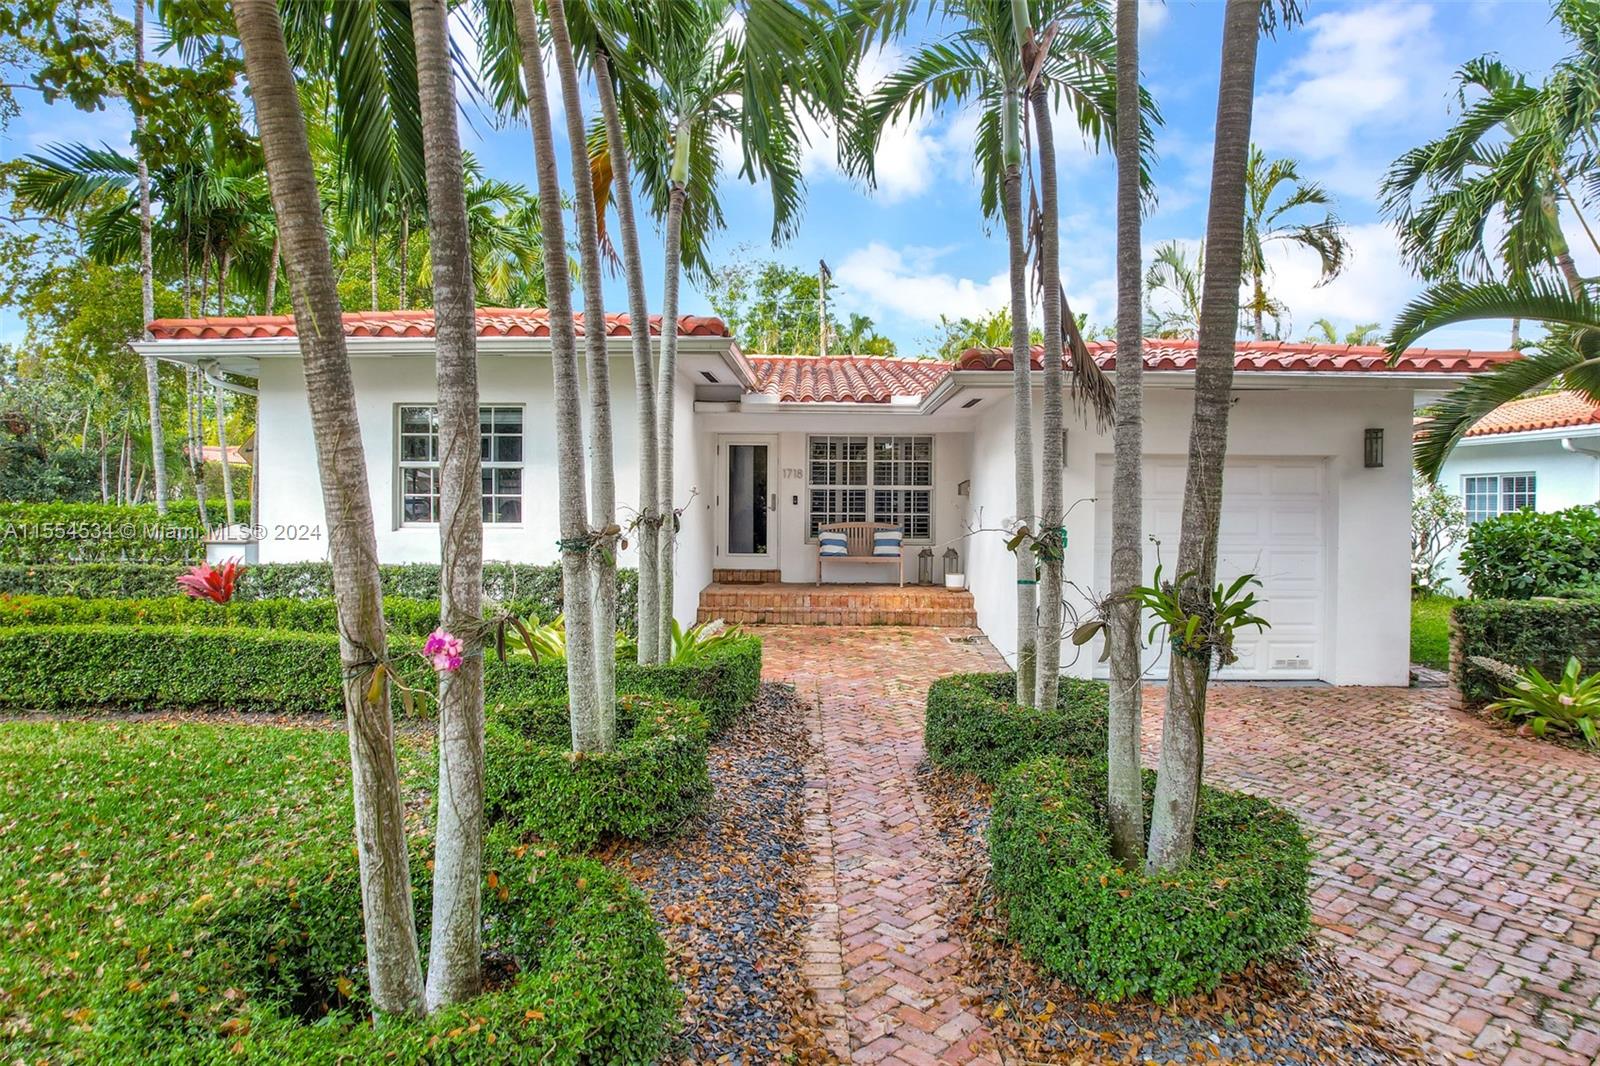 Property for Sale at 1718 Costado St, Coral Gables, Broward County, Florida - Bedrooms: 3 
Bathrooms: 3  - $1,650,000